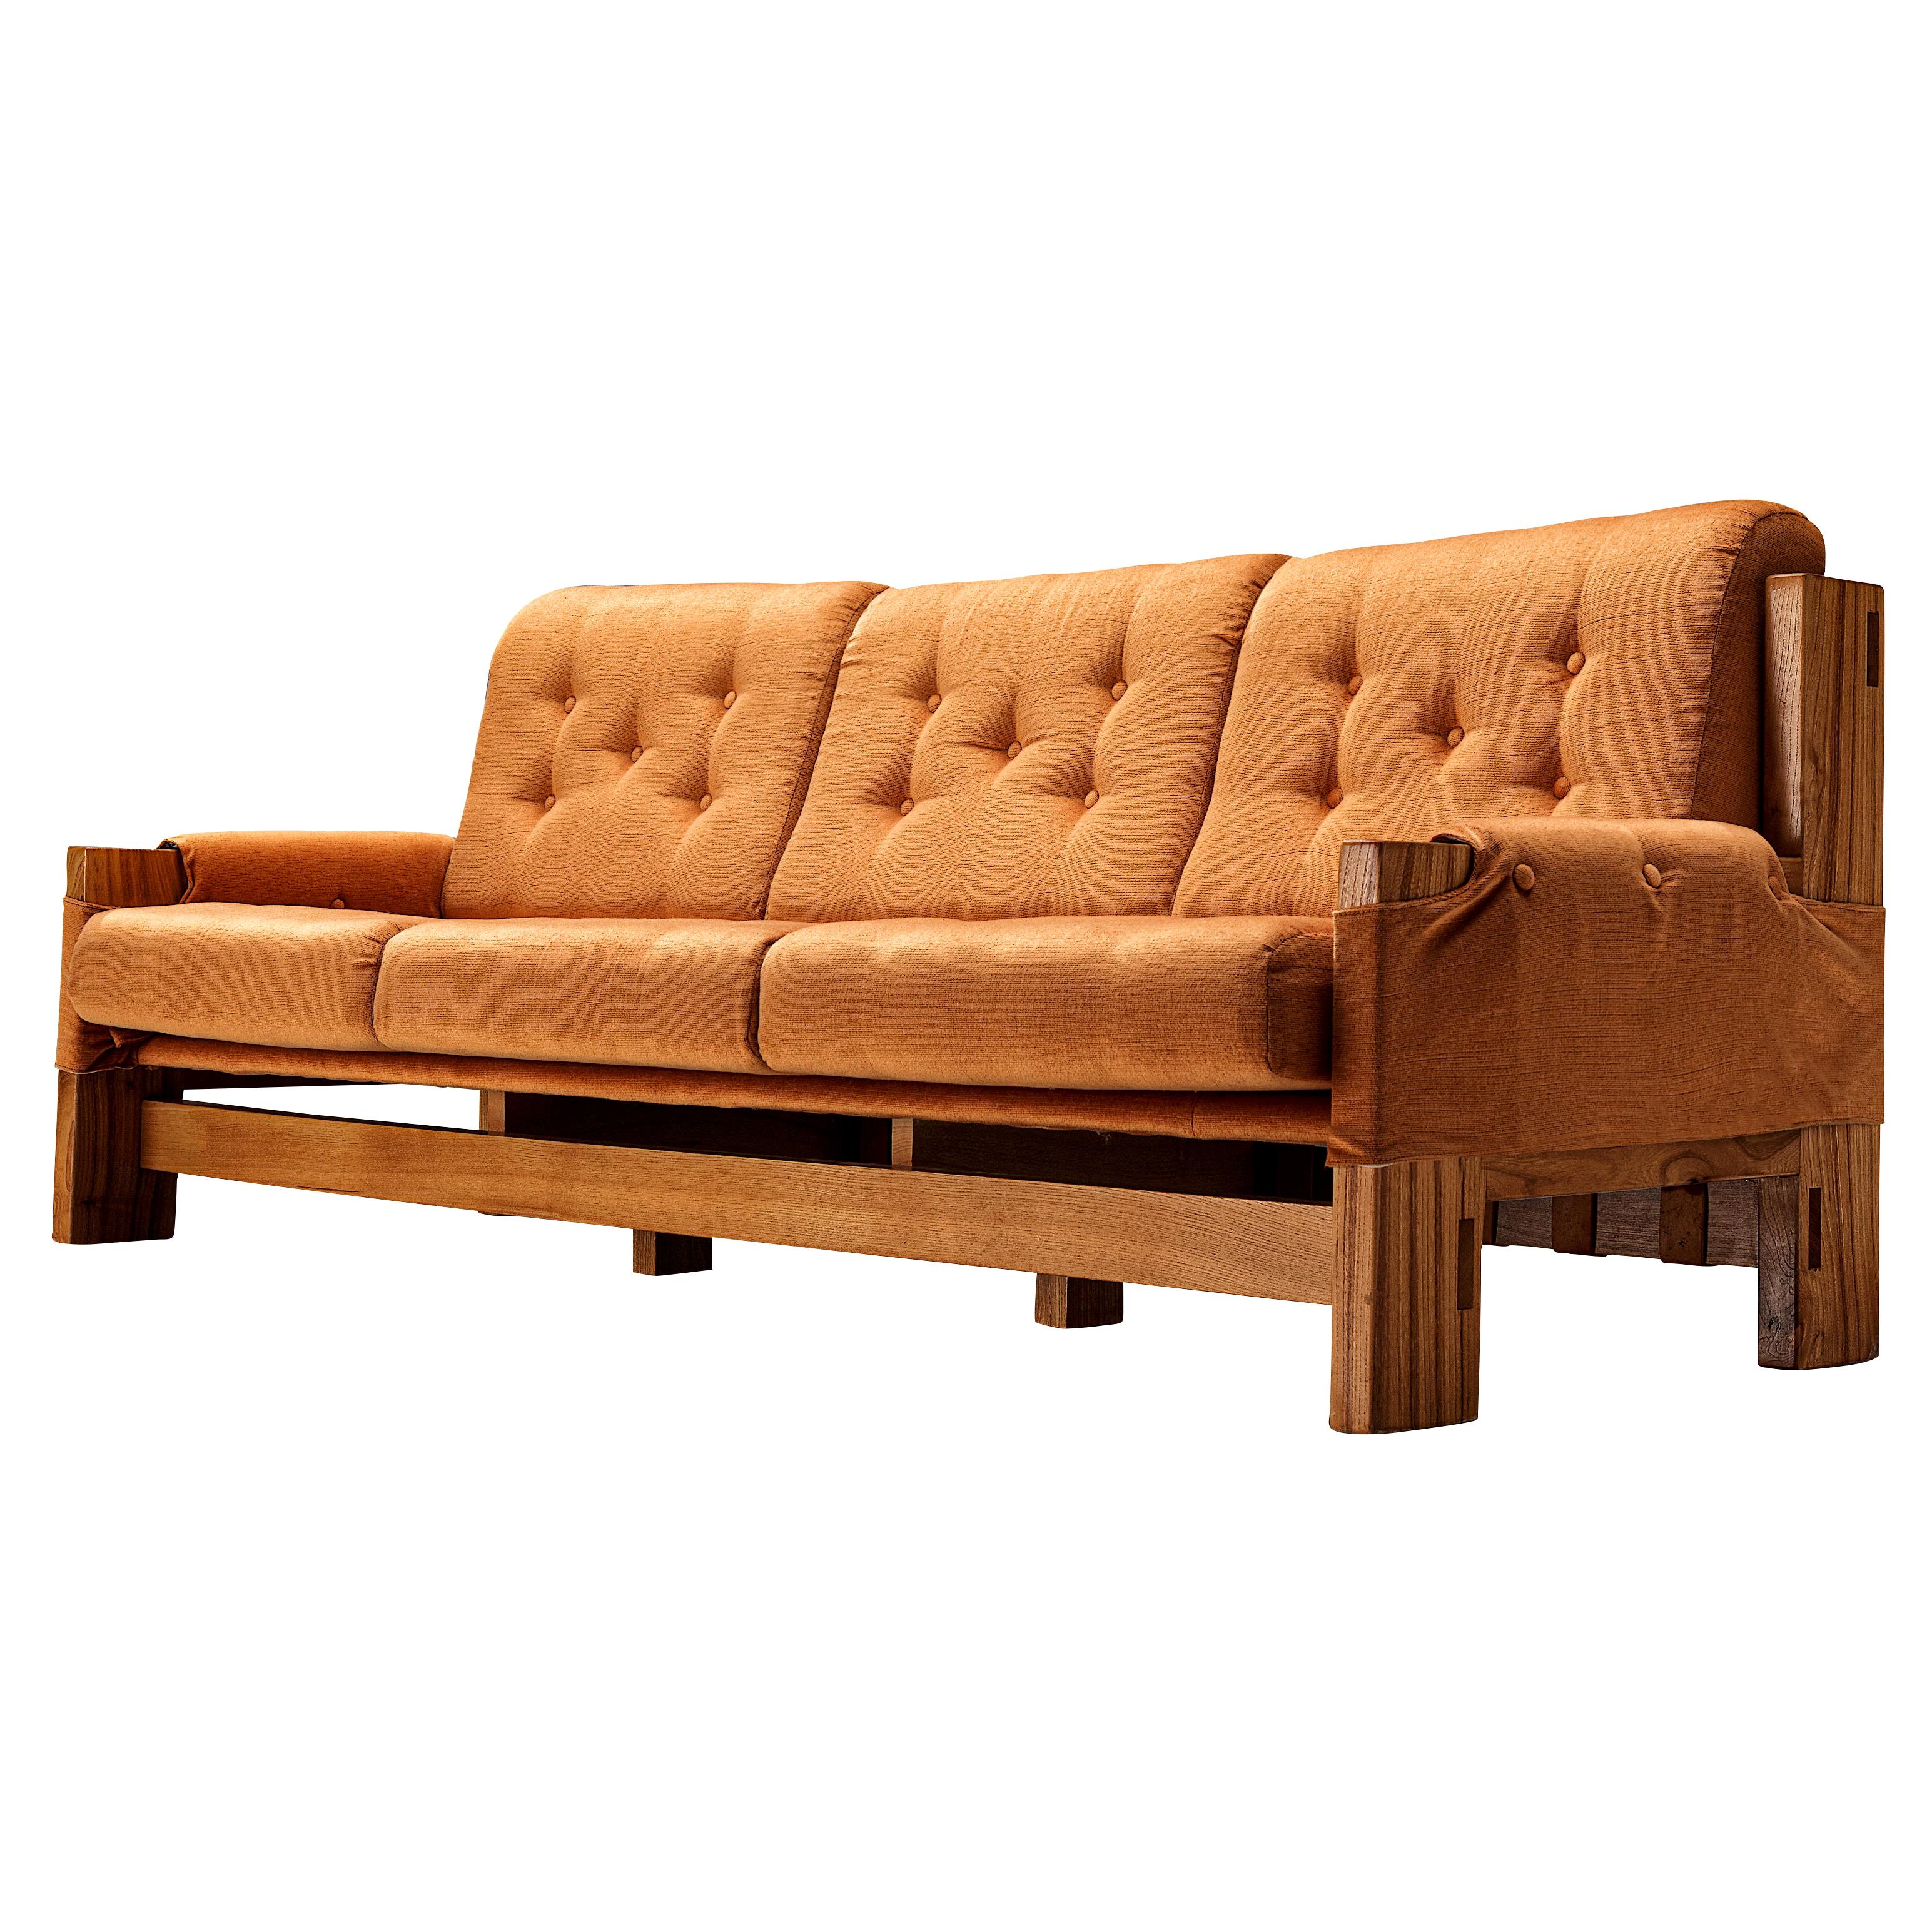 Maison Regain Sofa in Elm and Orange Upholstery 